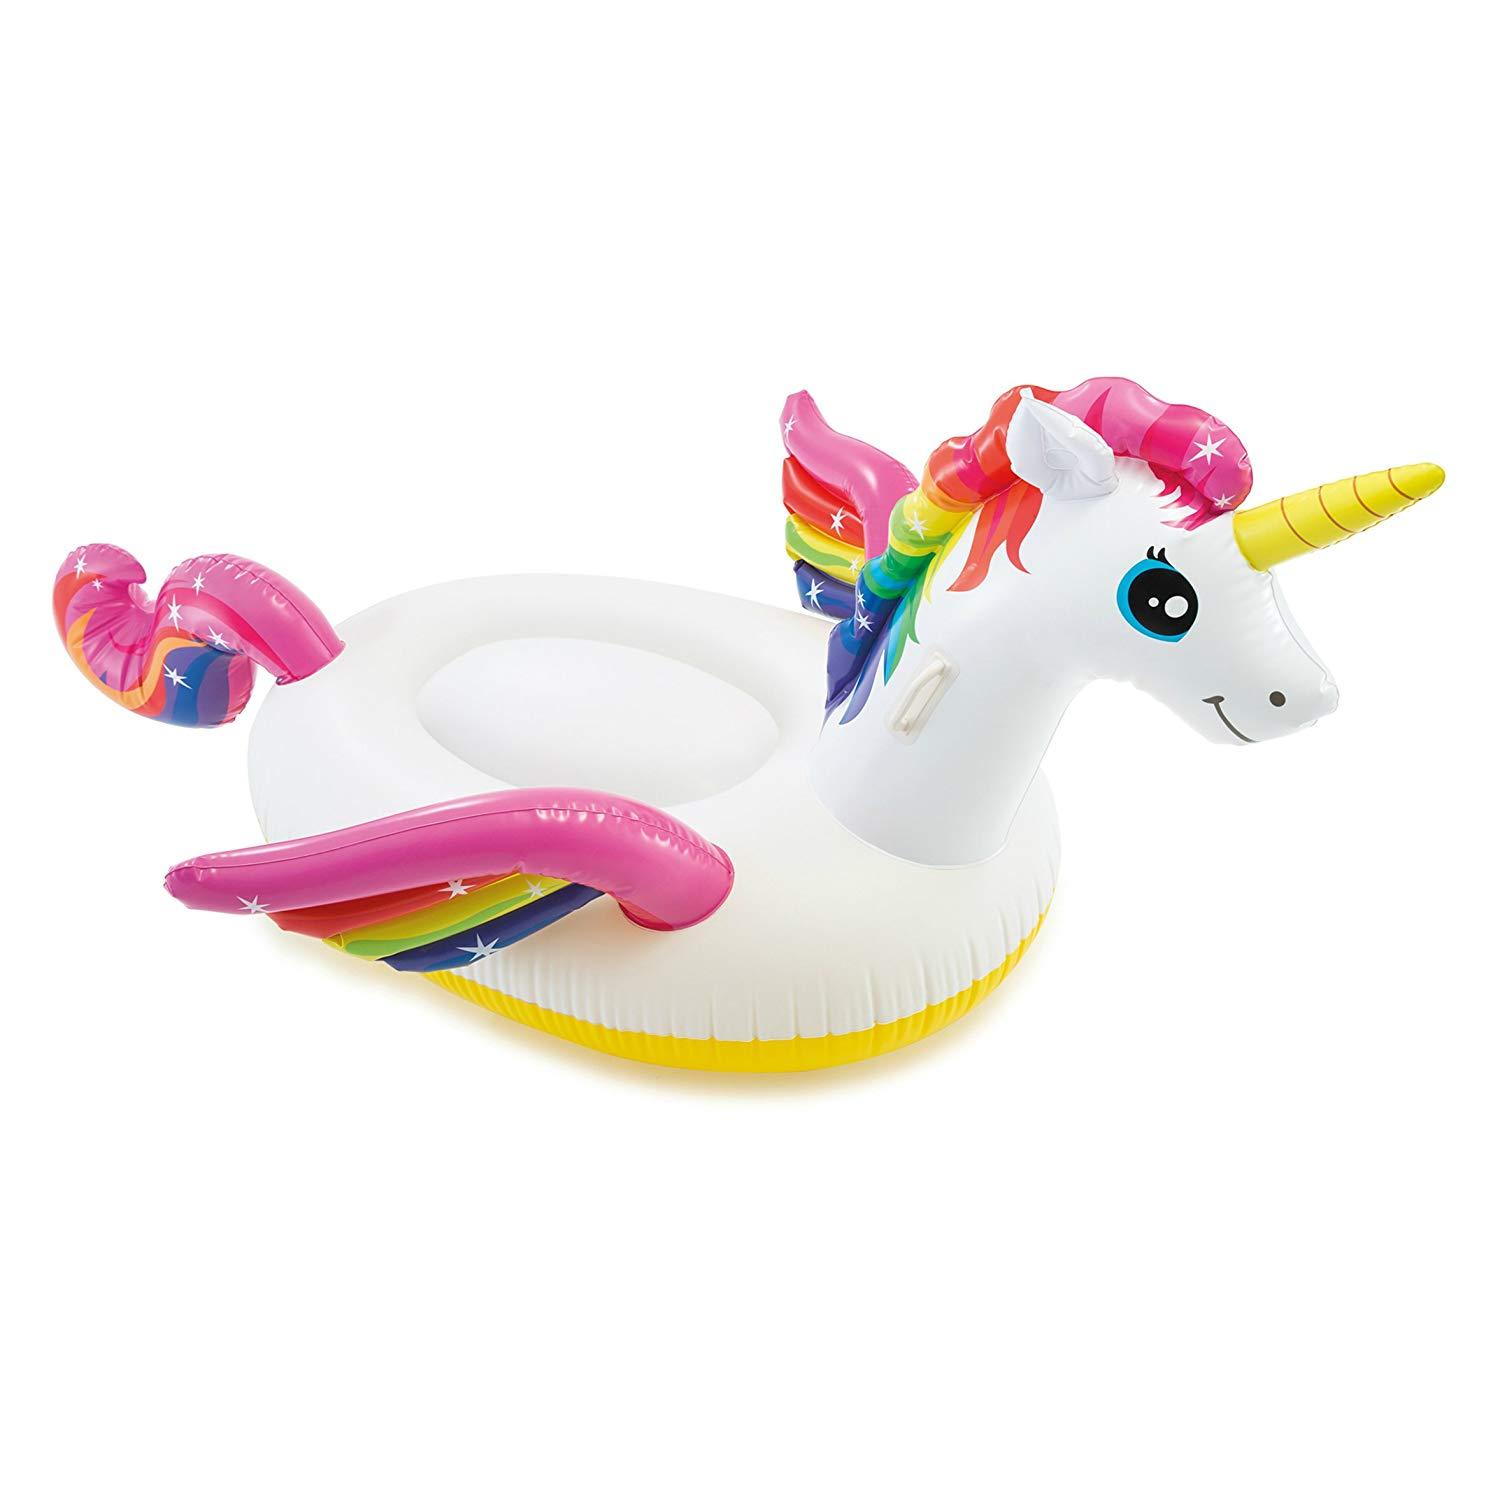 ToysRus (ทอยส์อาร์อัส) - Intex แพยางเป่าลม Unicorn Inflatable Ride-On Pool Float (901062)